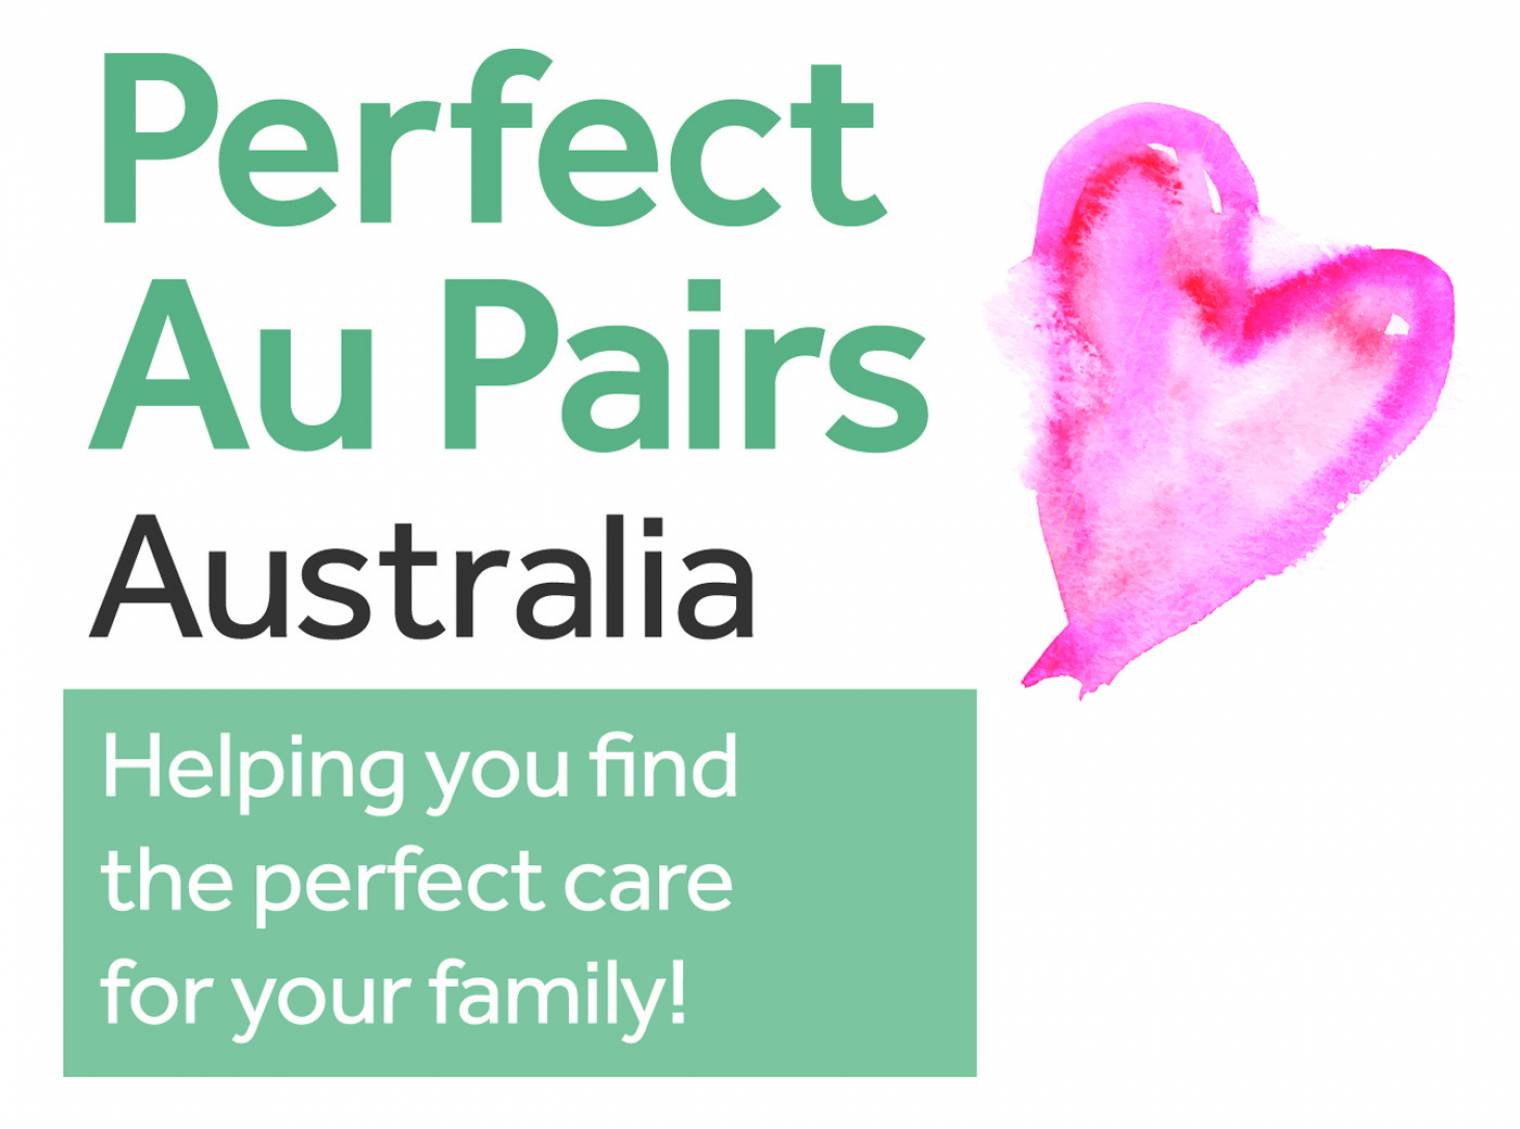 Perfect Au Pairs Australia joins IAPA as affiliate member